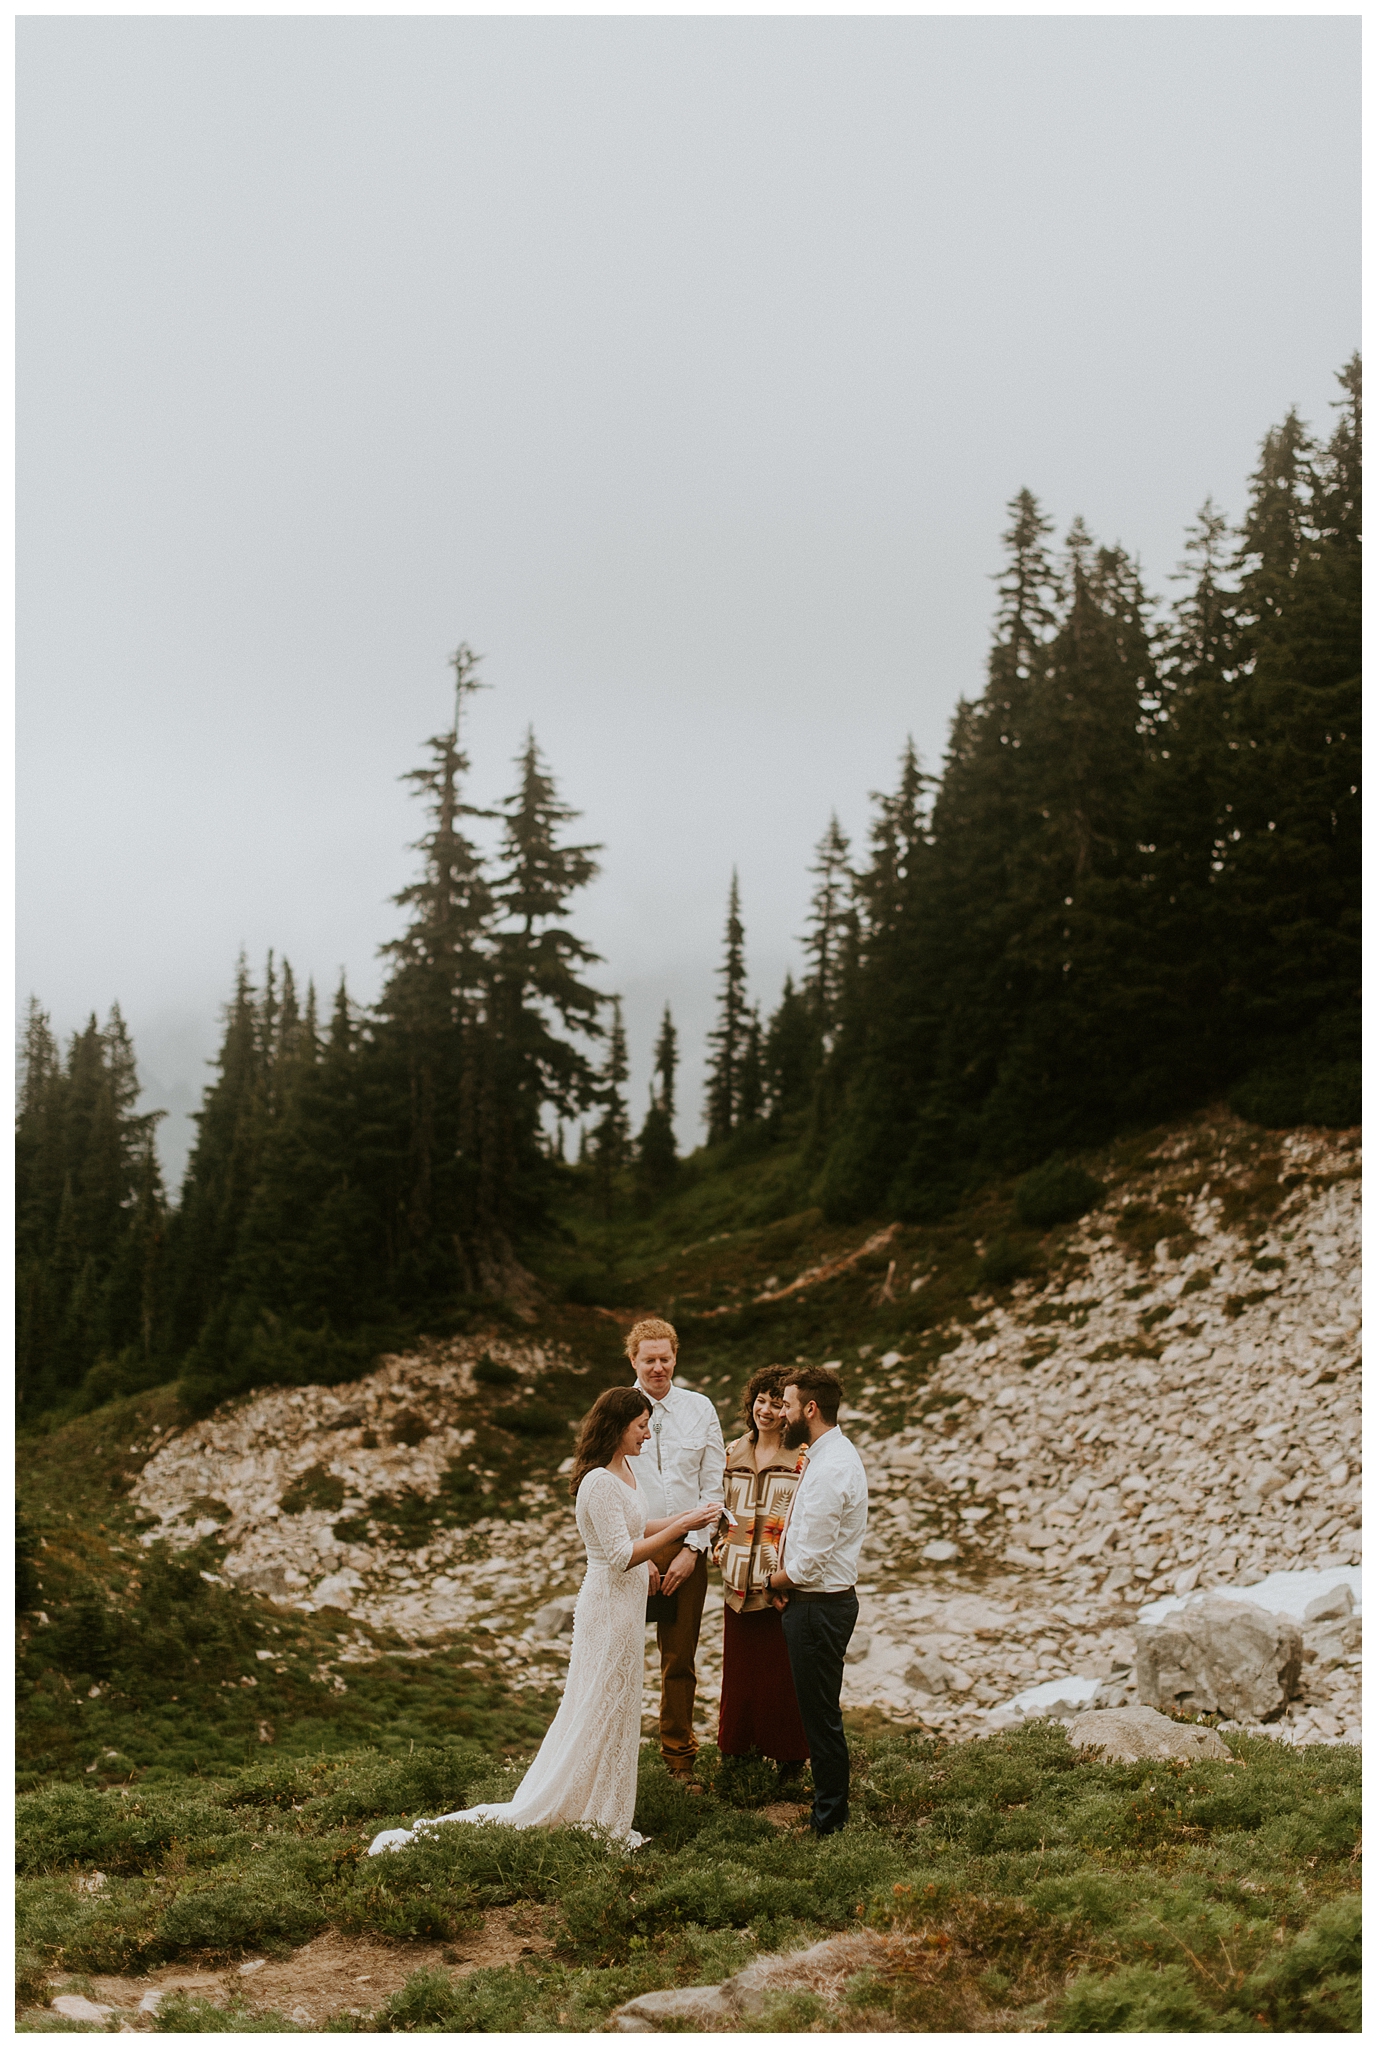 Pinnacle Peak Adventure Elopement at Mt. Rainier National Park by Seattle Elopement Photographer, Kamra Fuller Photography - Seattle Wedding Photographer